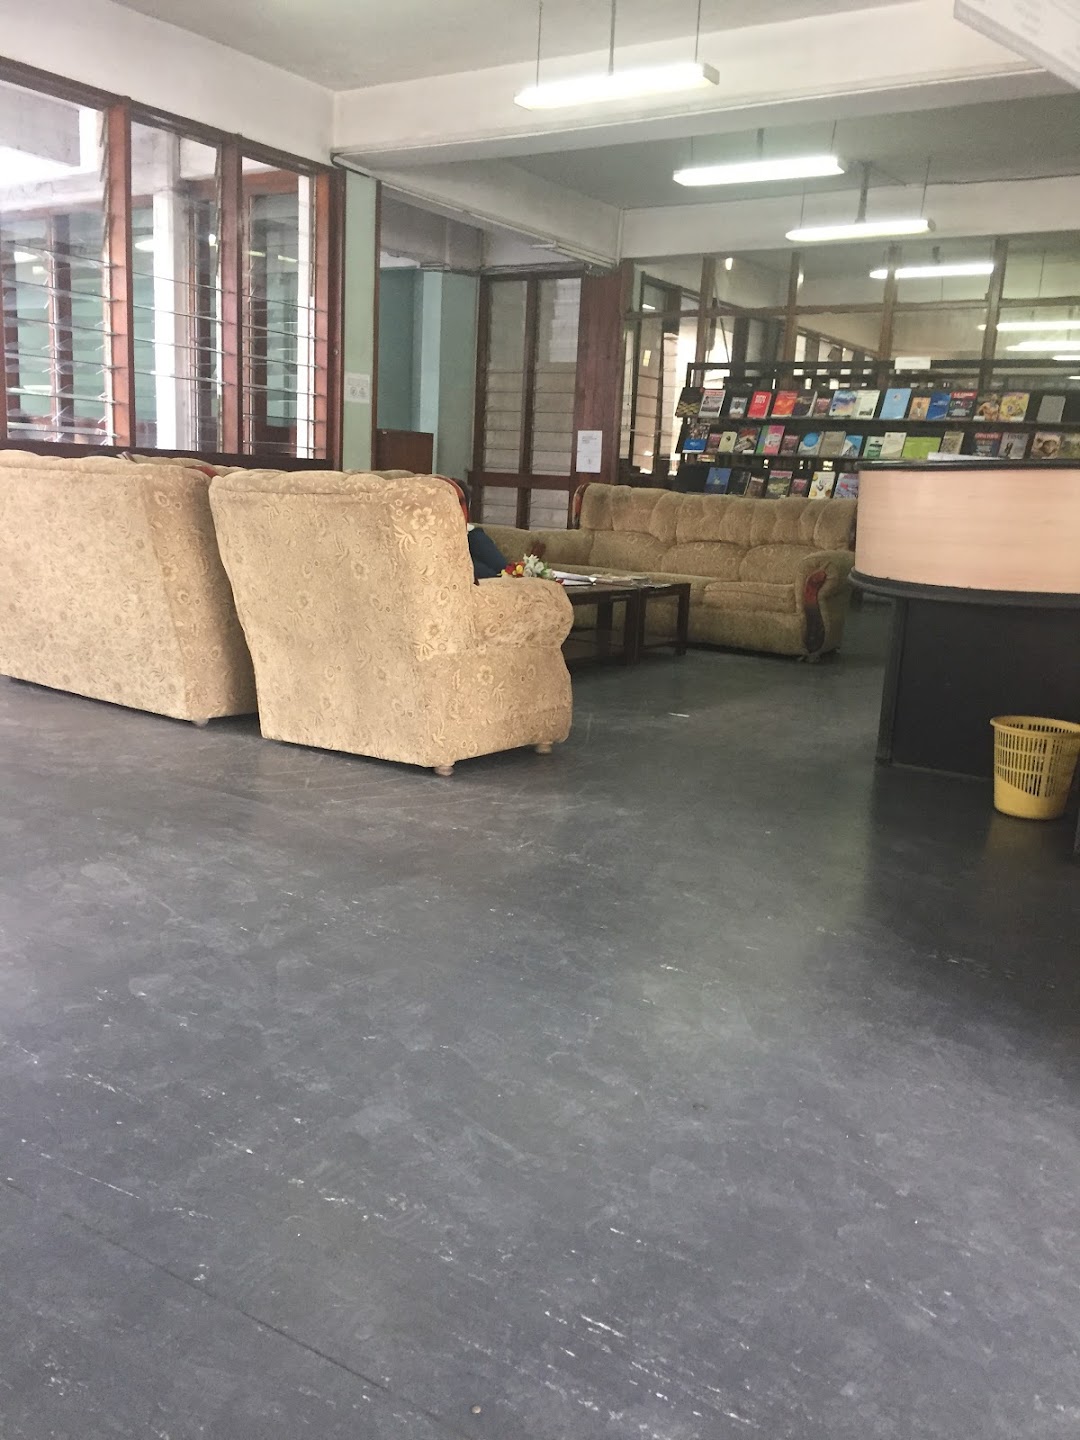 Dar es Salaam Library